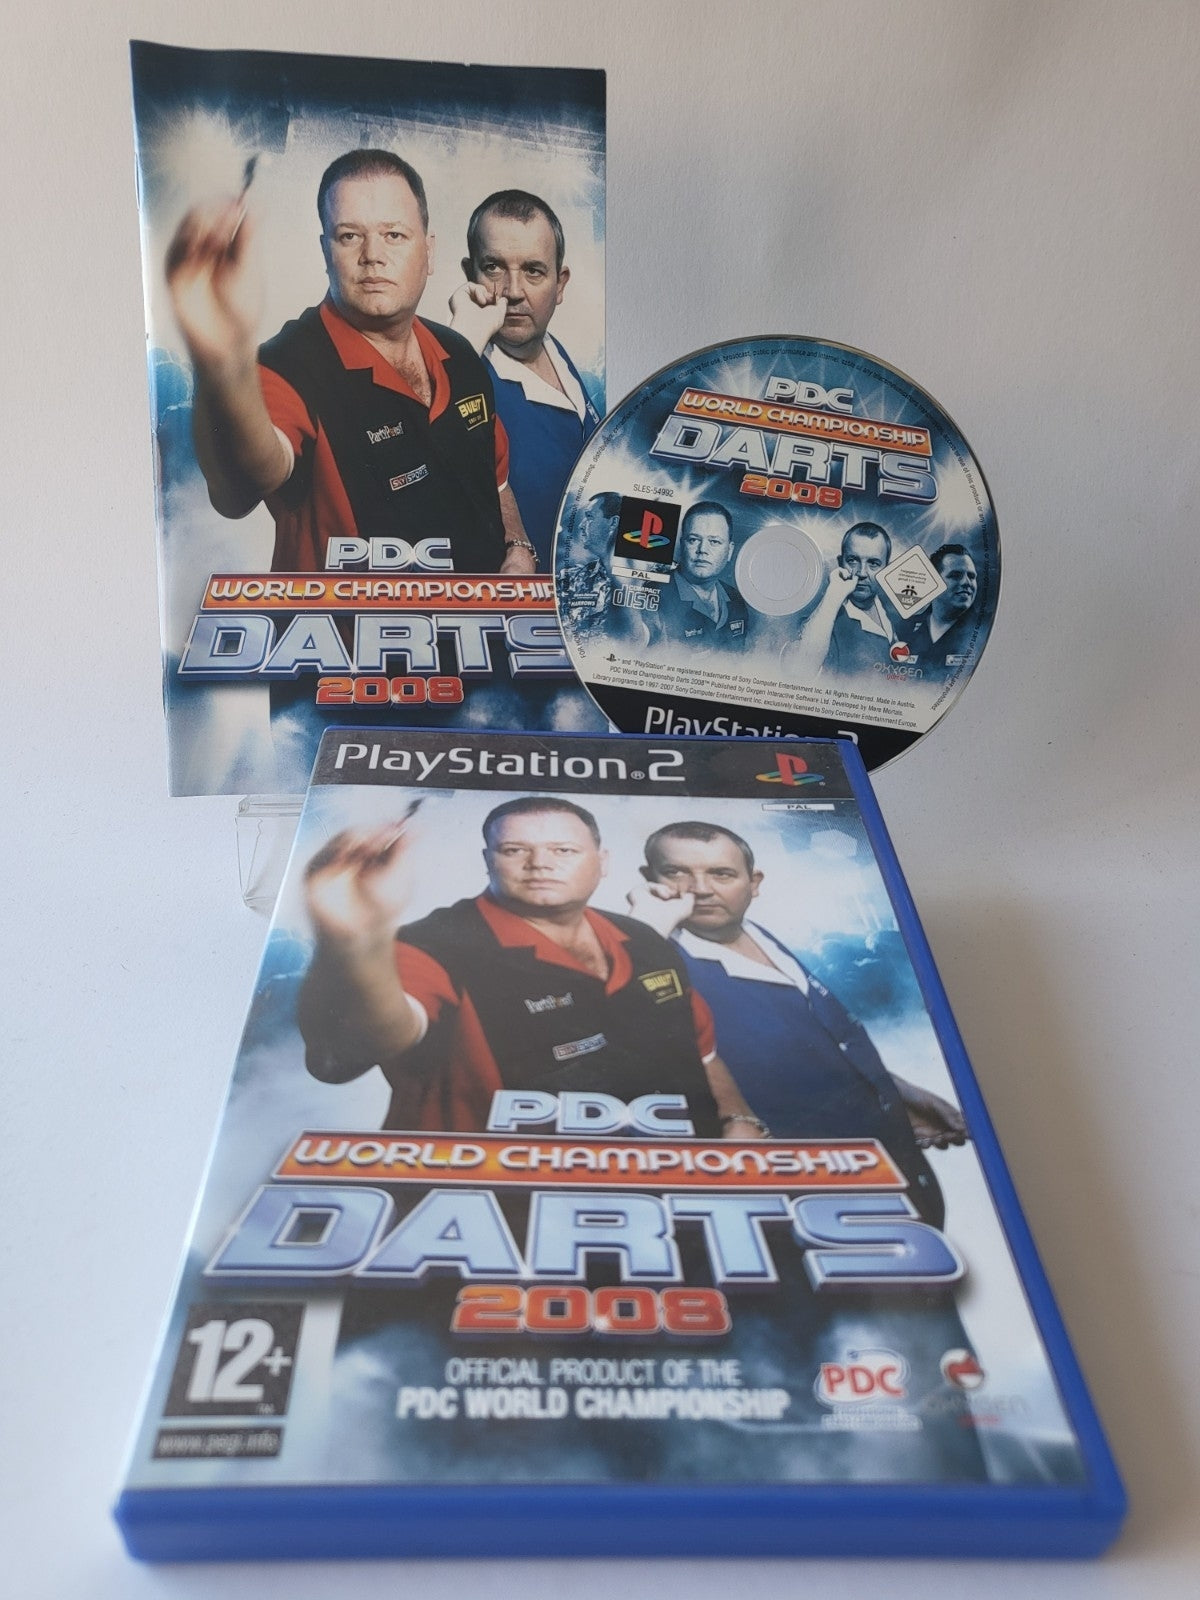 PDC World Championship Darts 2008 Playstation 2